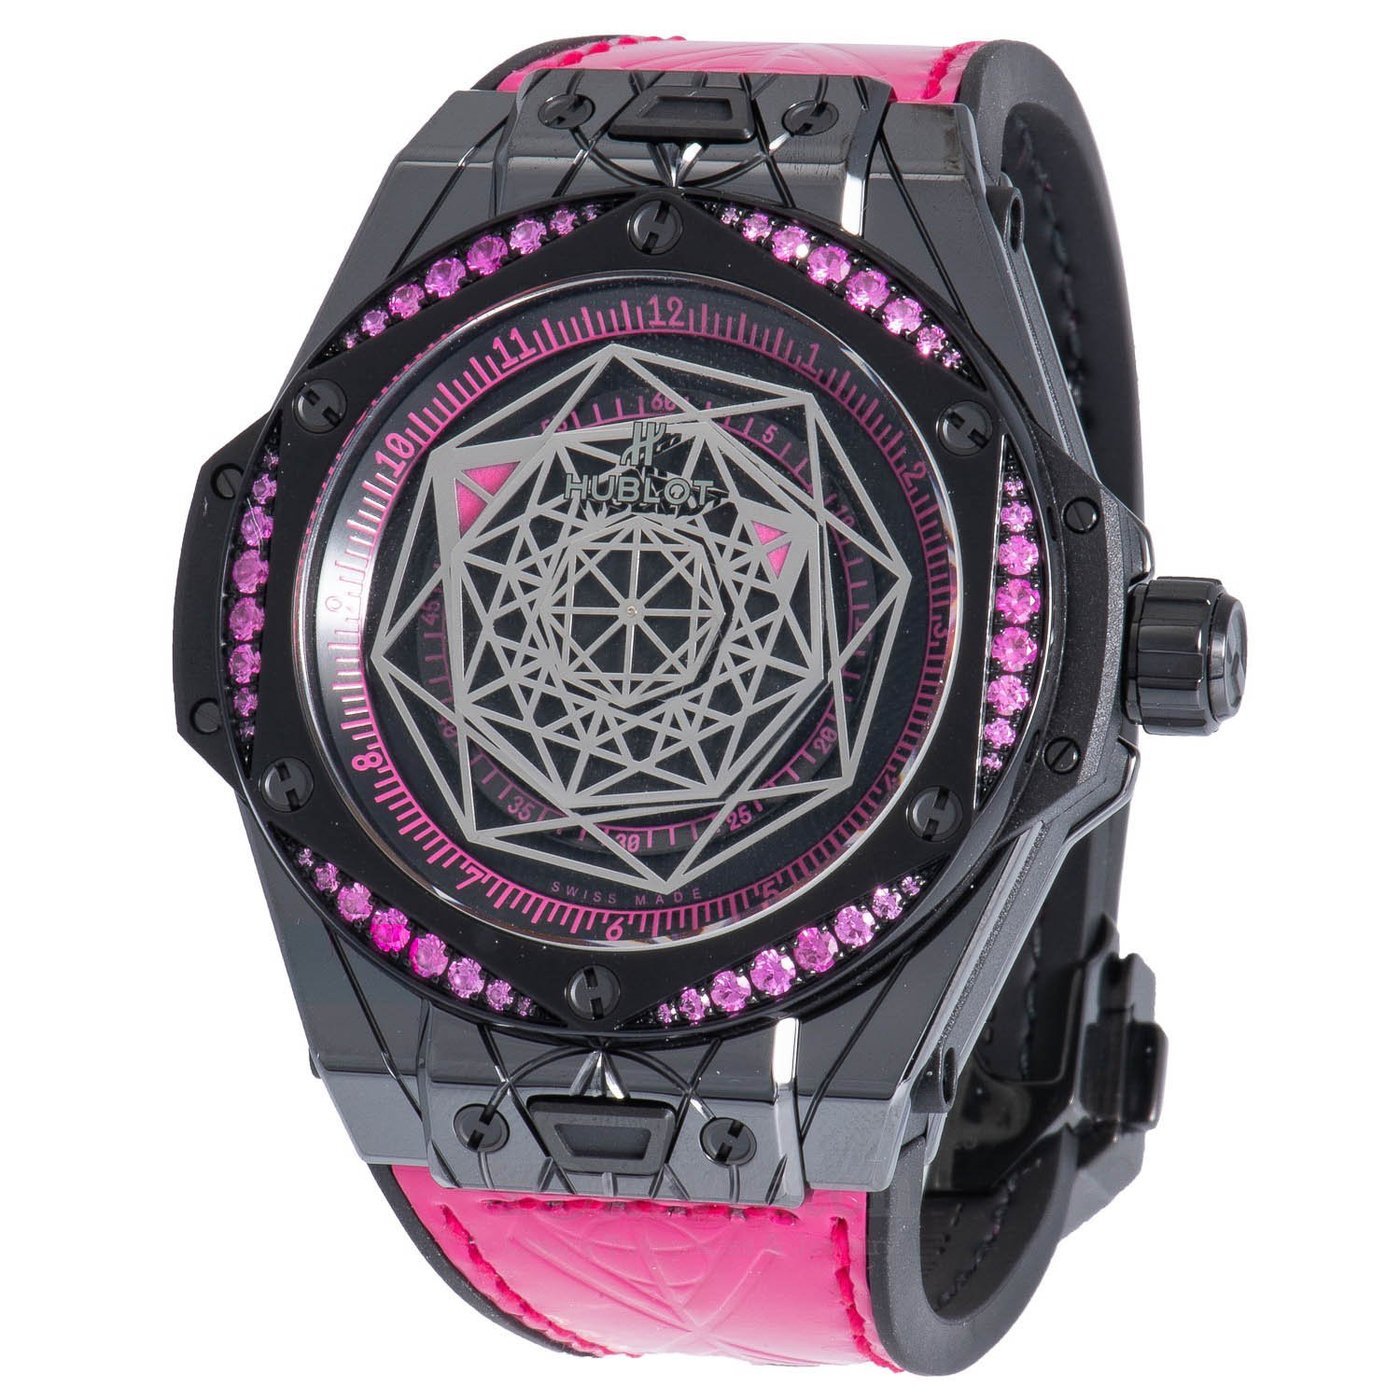 Hublot-Big-Bang-Sang-Bleu-Pink-Ladies-39mm-Watch-465CS1119VR1233MXM18-Yourwatch